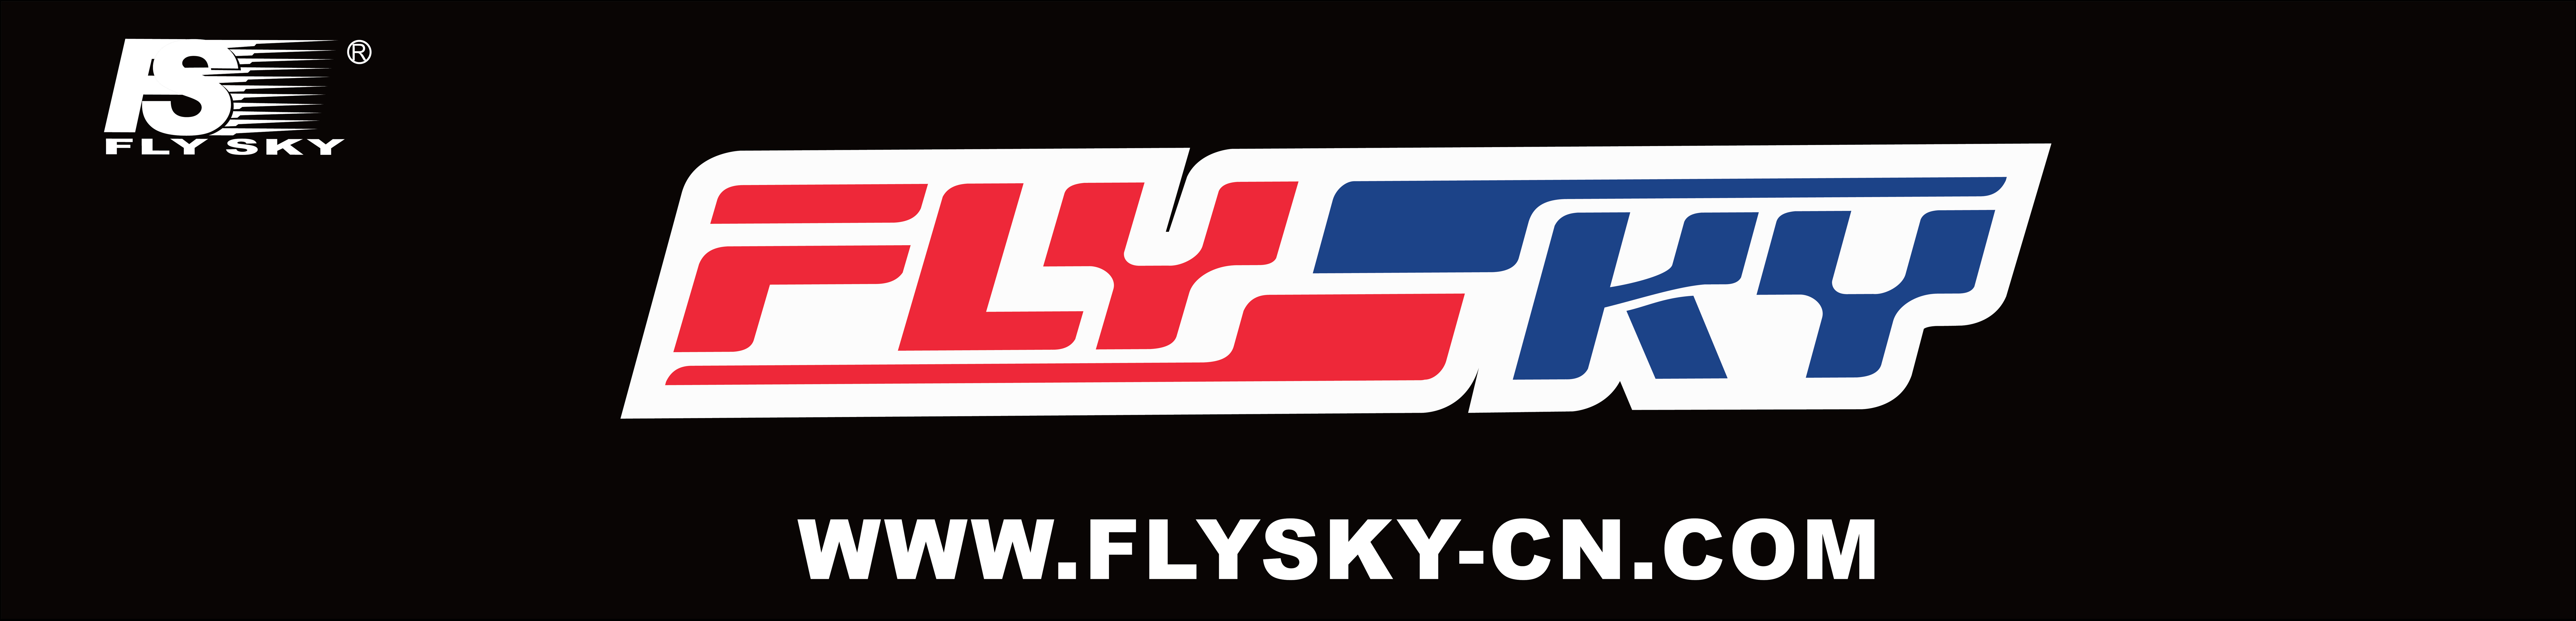 FLYSKY-CN